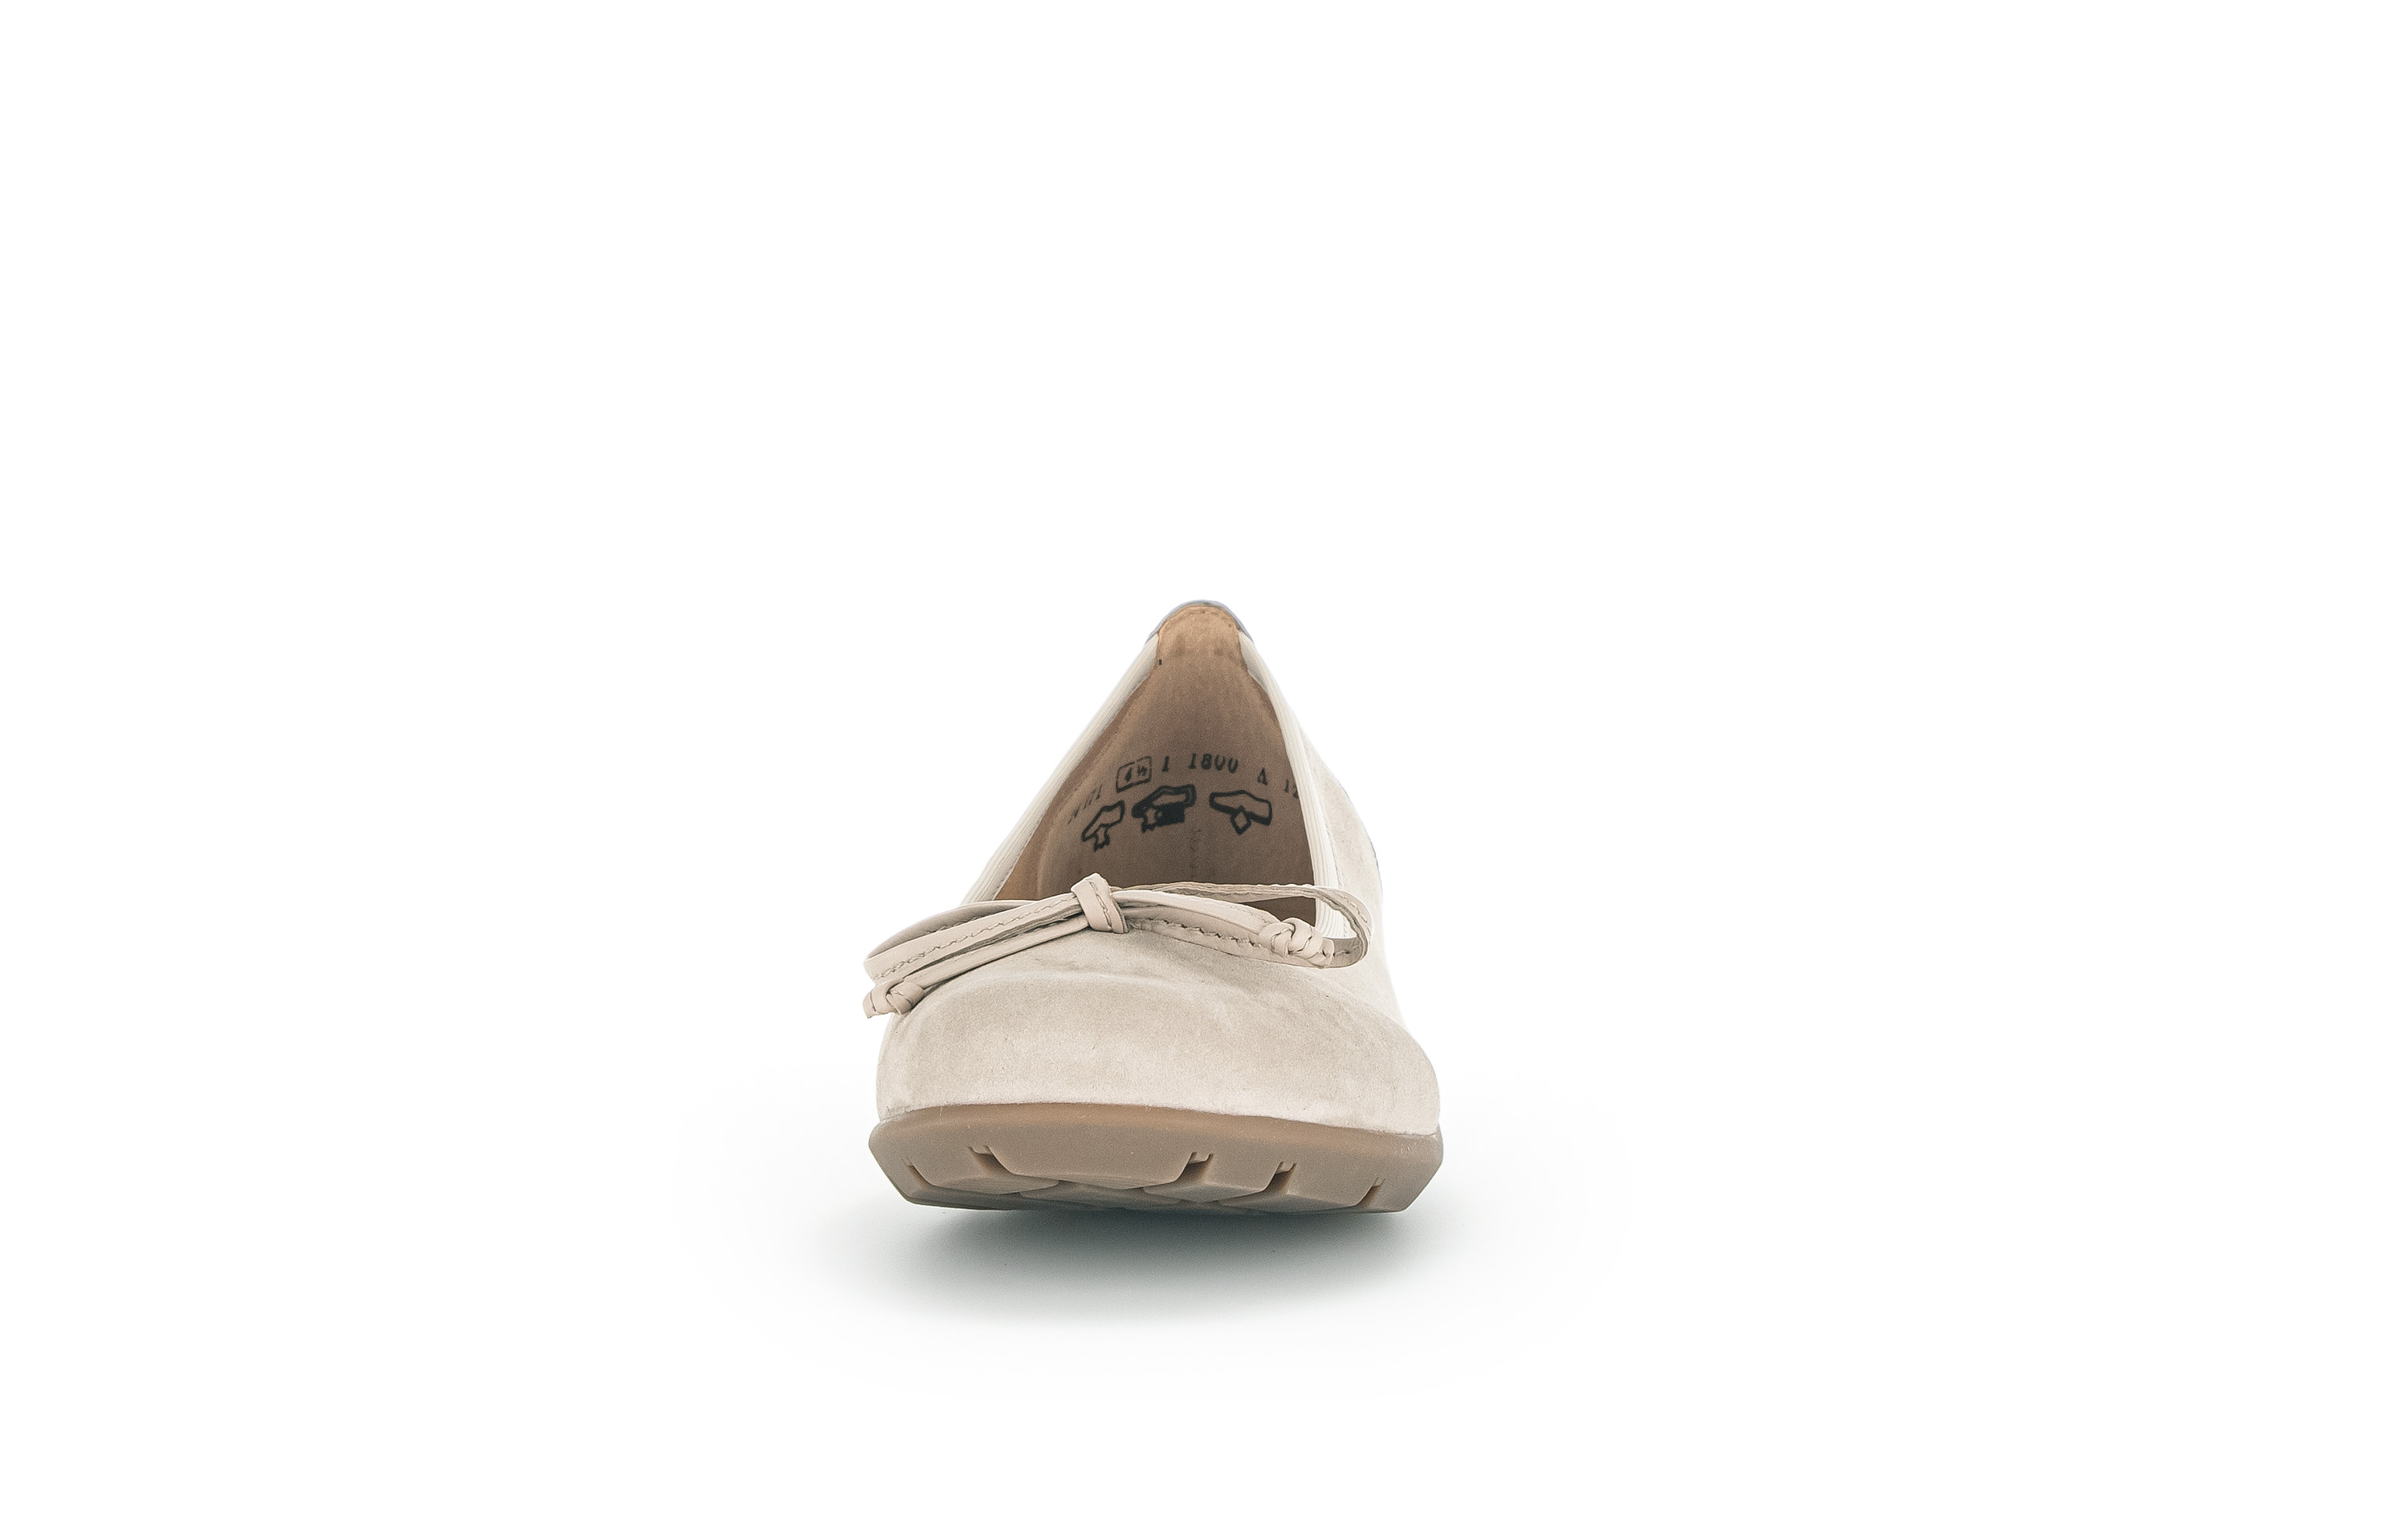 Gabor Shoes Ballerina - Beige suede leather